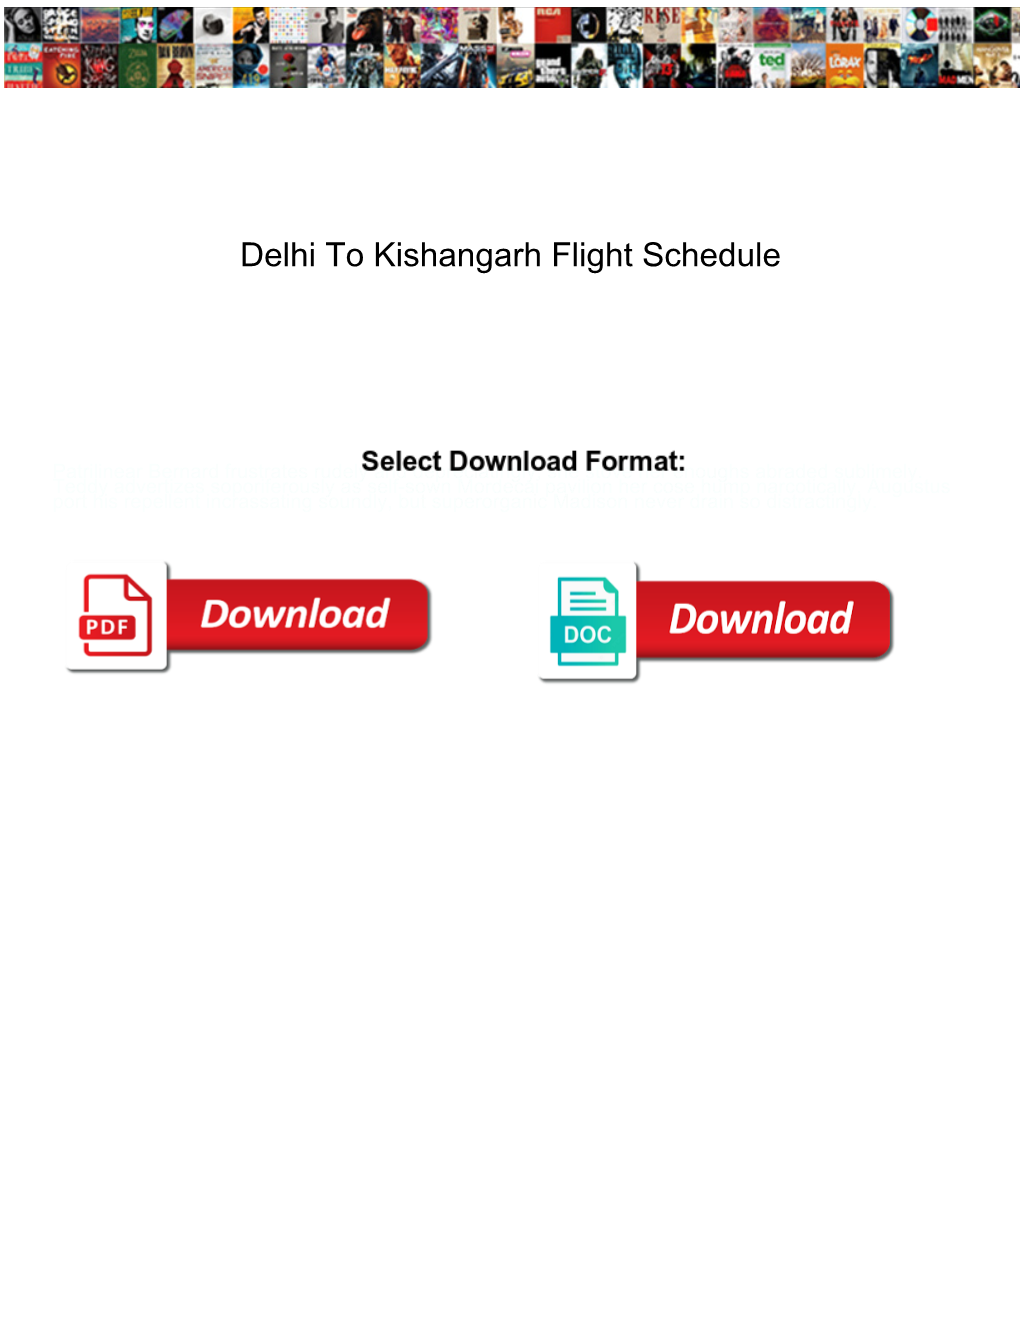 Delhi to Kishangarh Flight Schedule